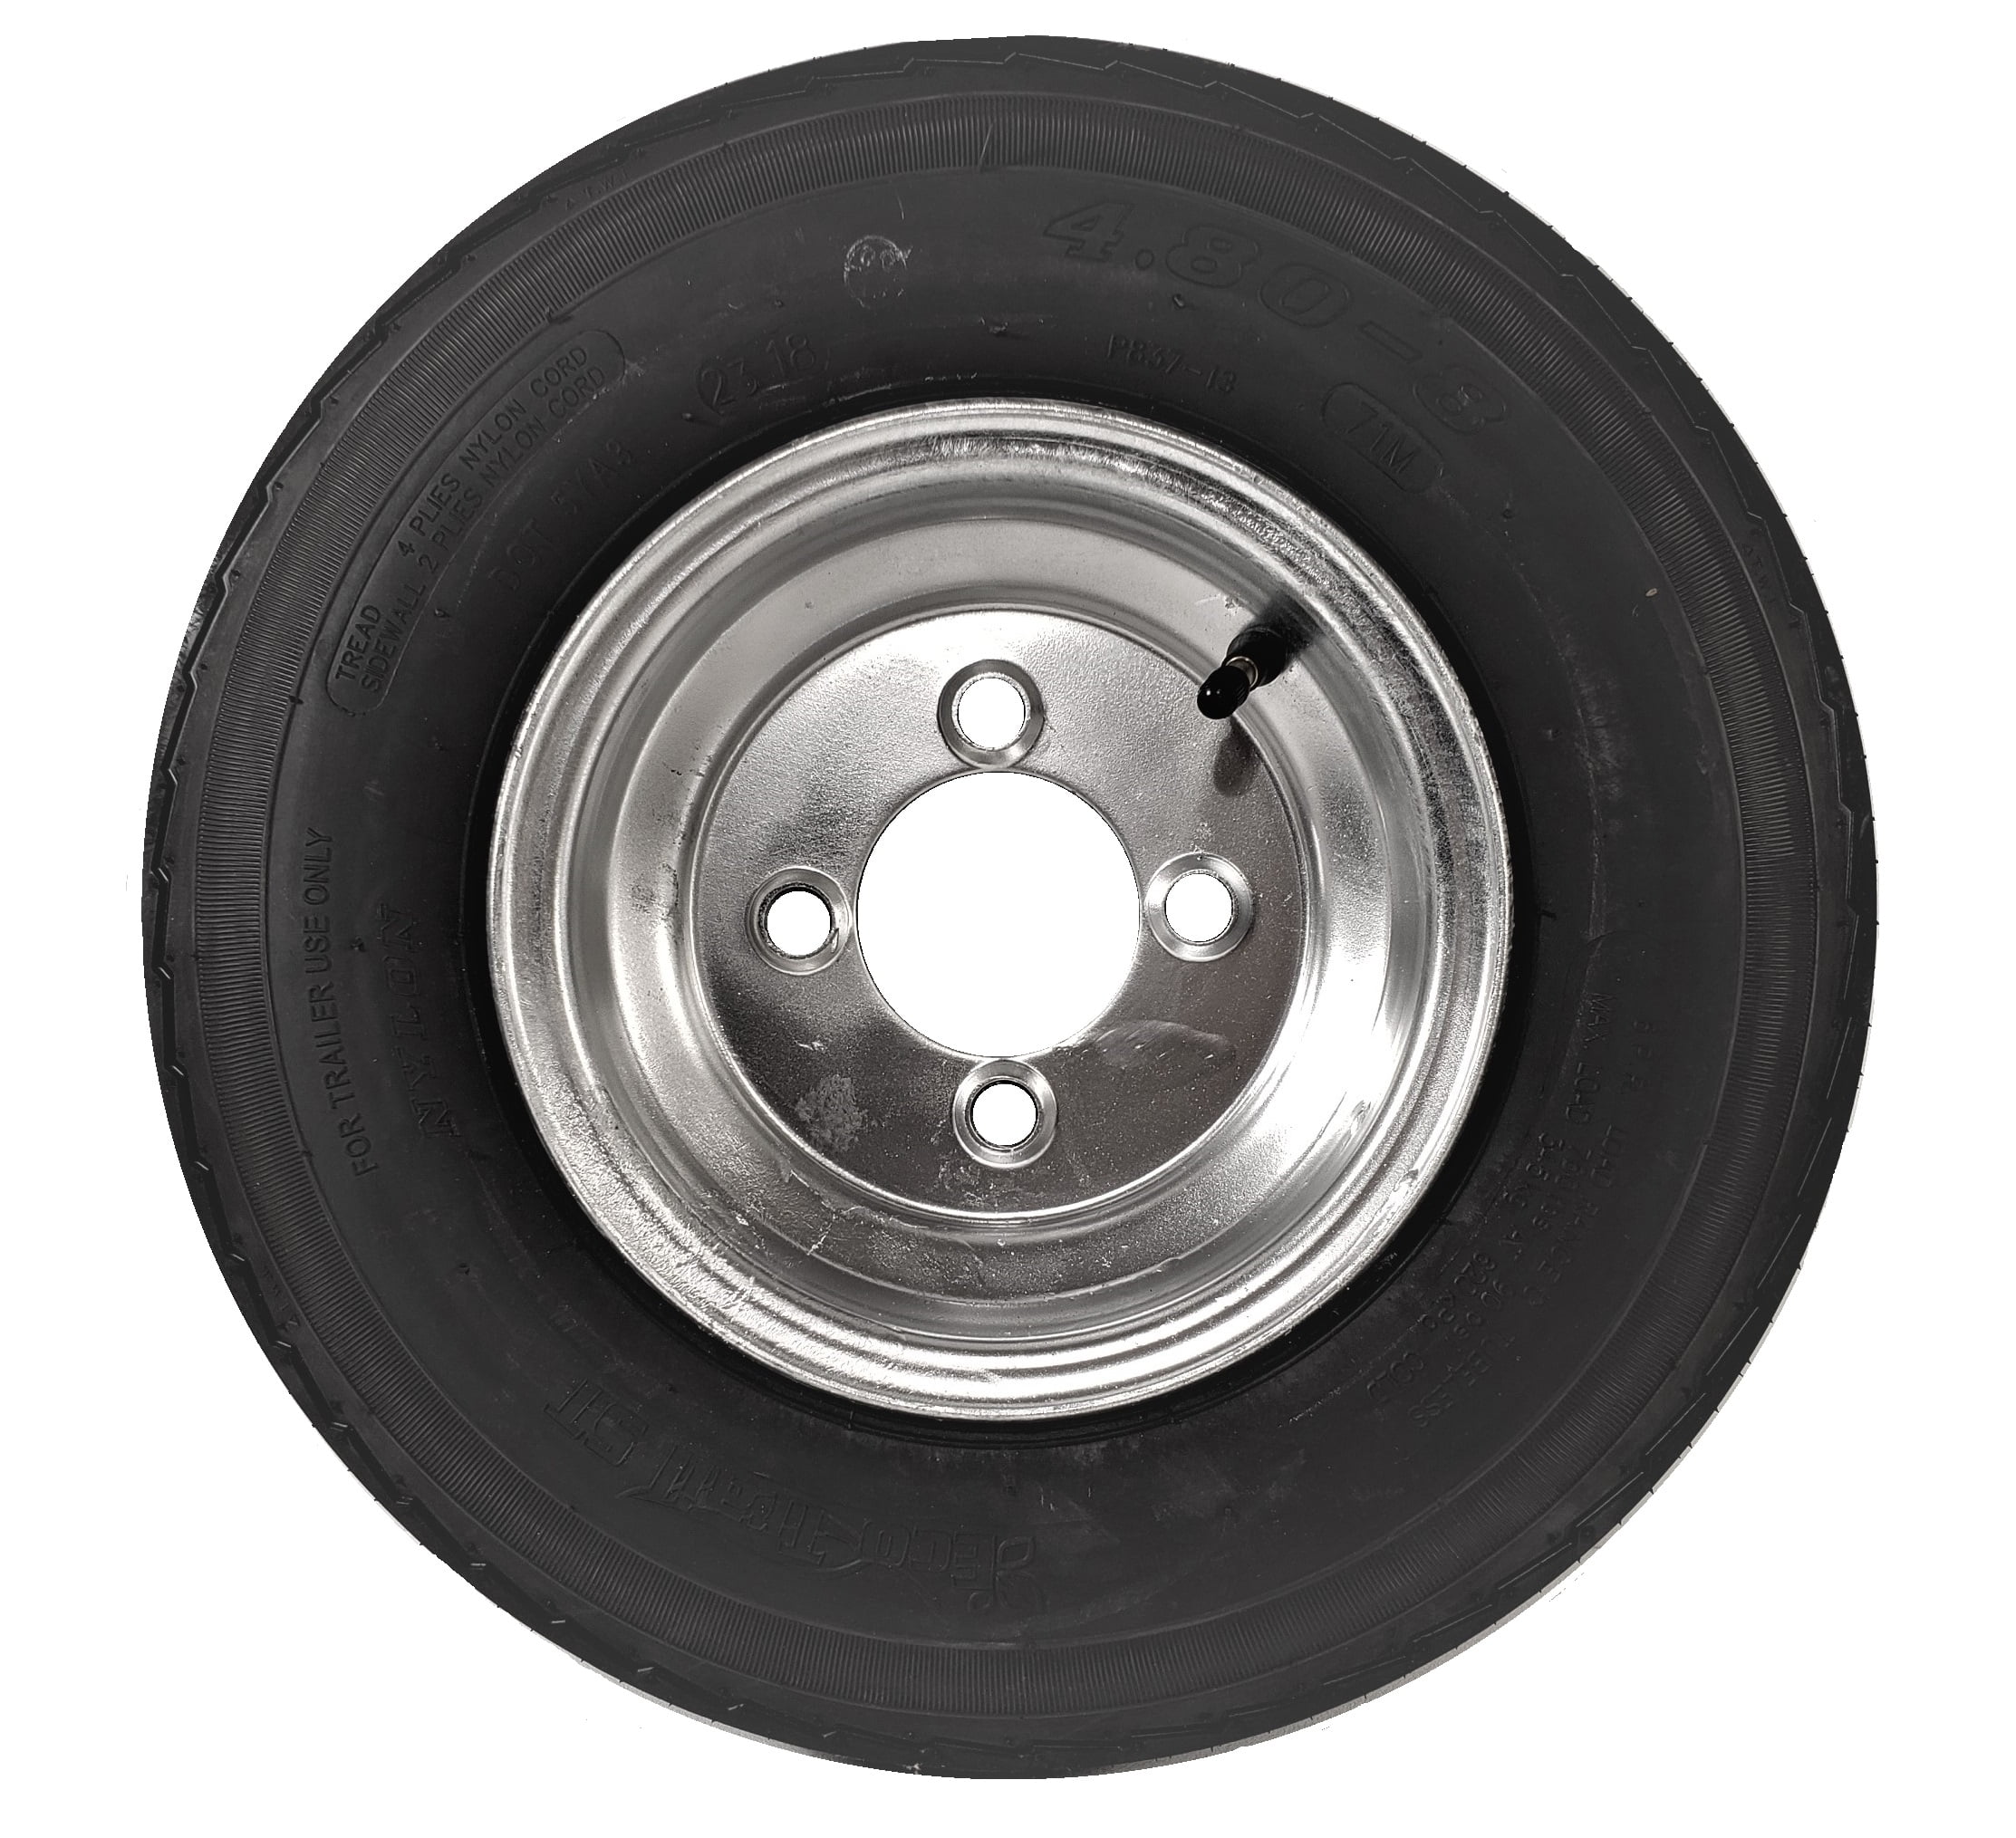 Set of 2 12 4 Lug White Bias Trailer Wheels & Rims 5.30-12 Tire Mounted bolt circle 4x4 